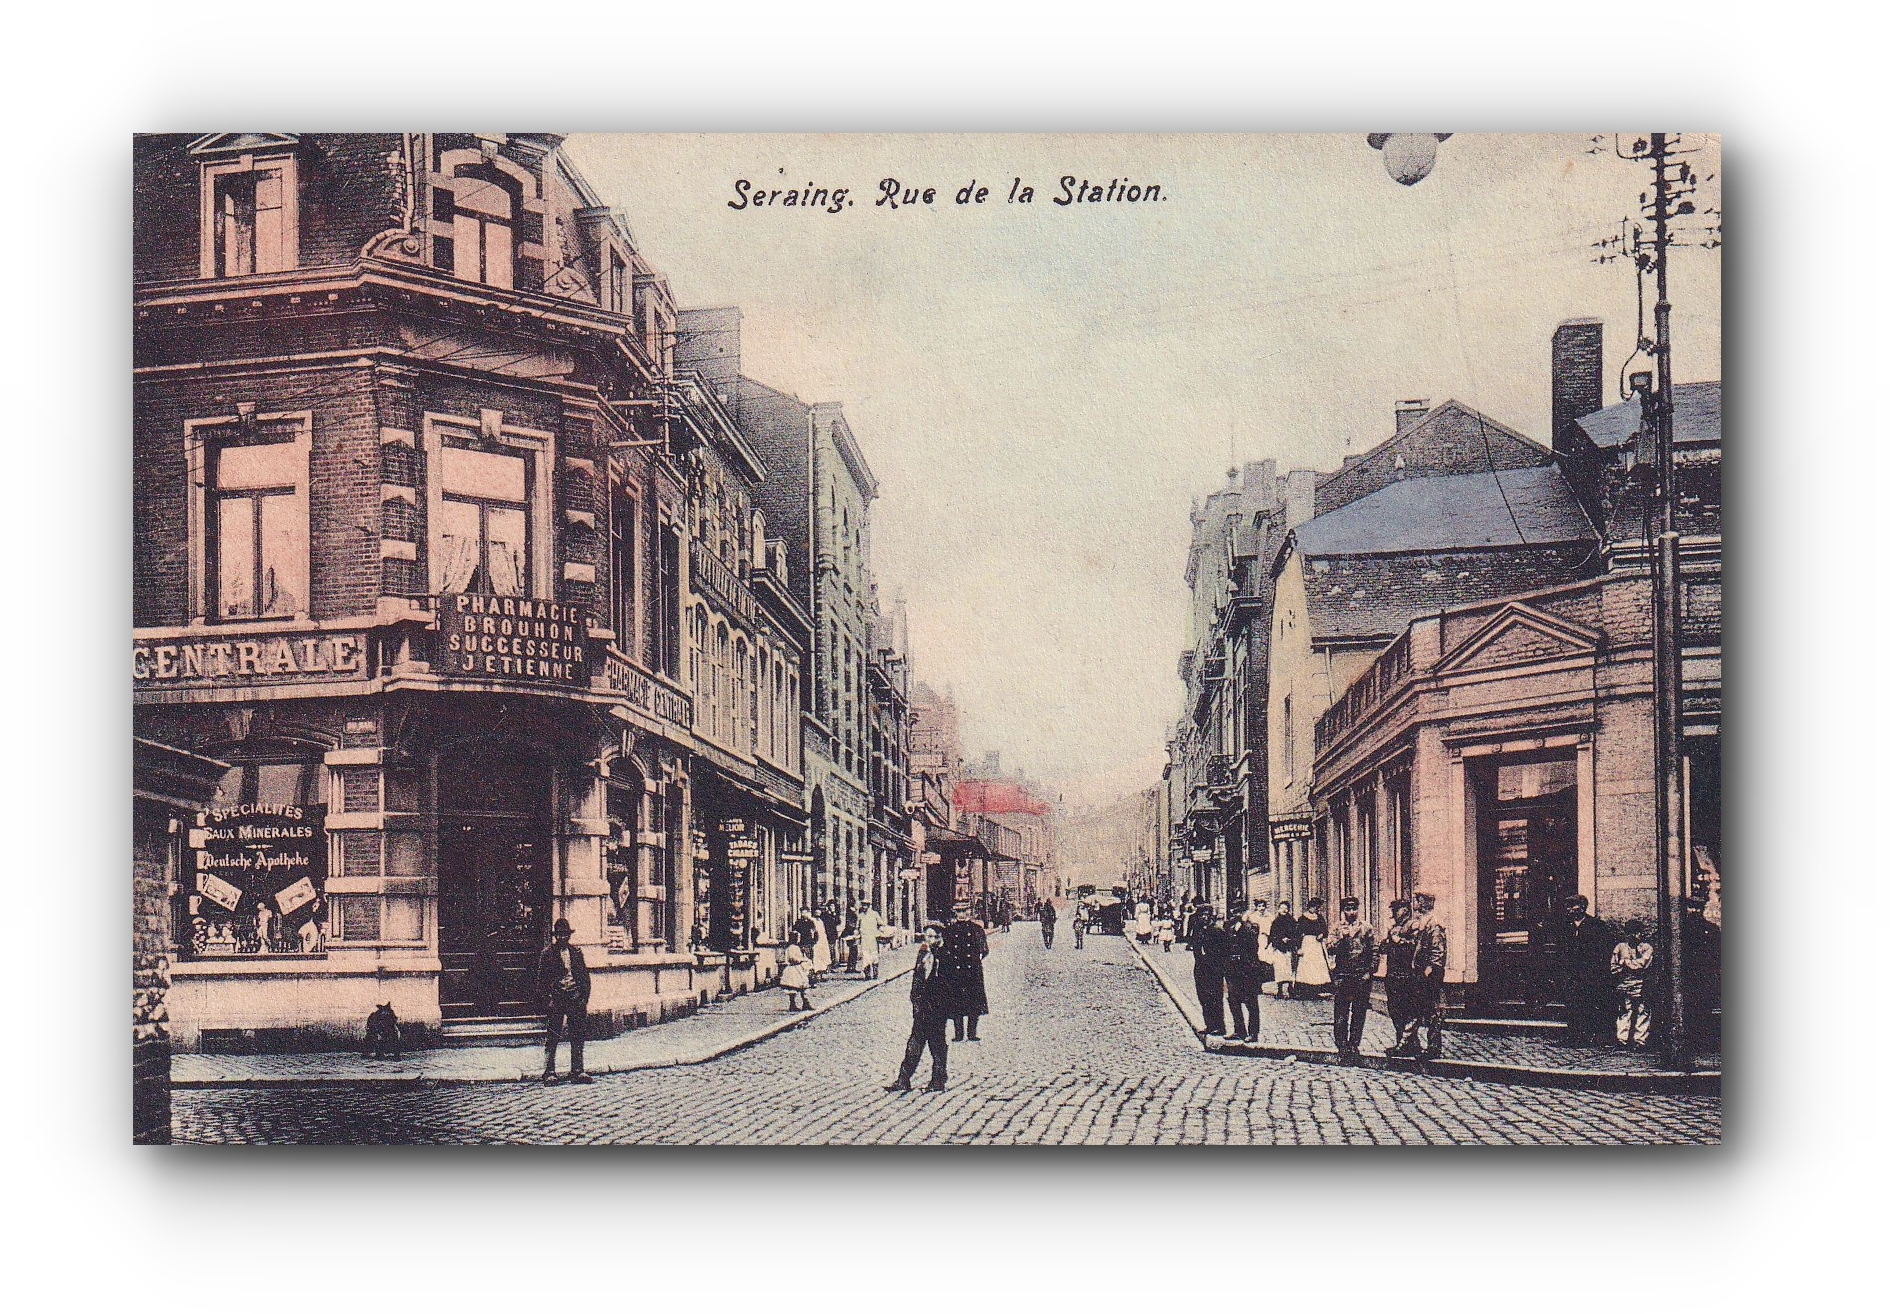 - Rue de la Station - SERAING - 21.09.1908 -